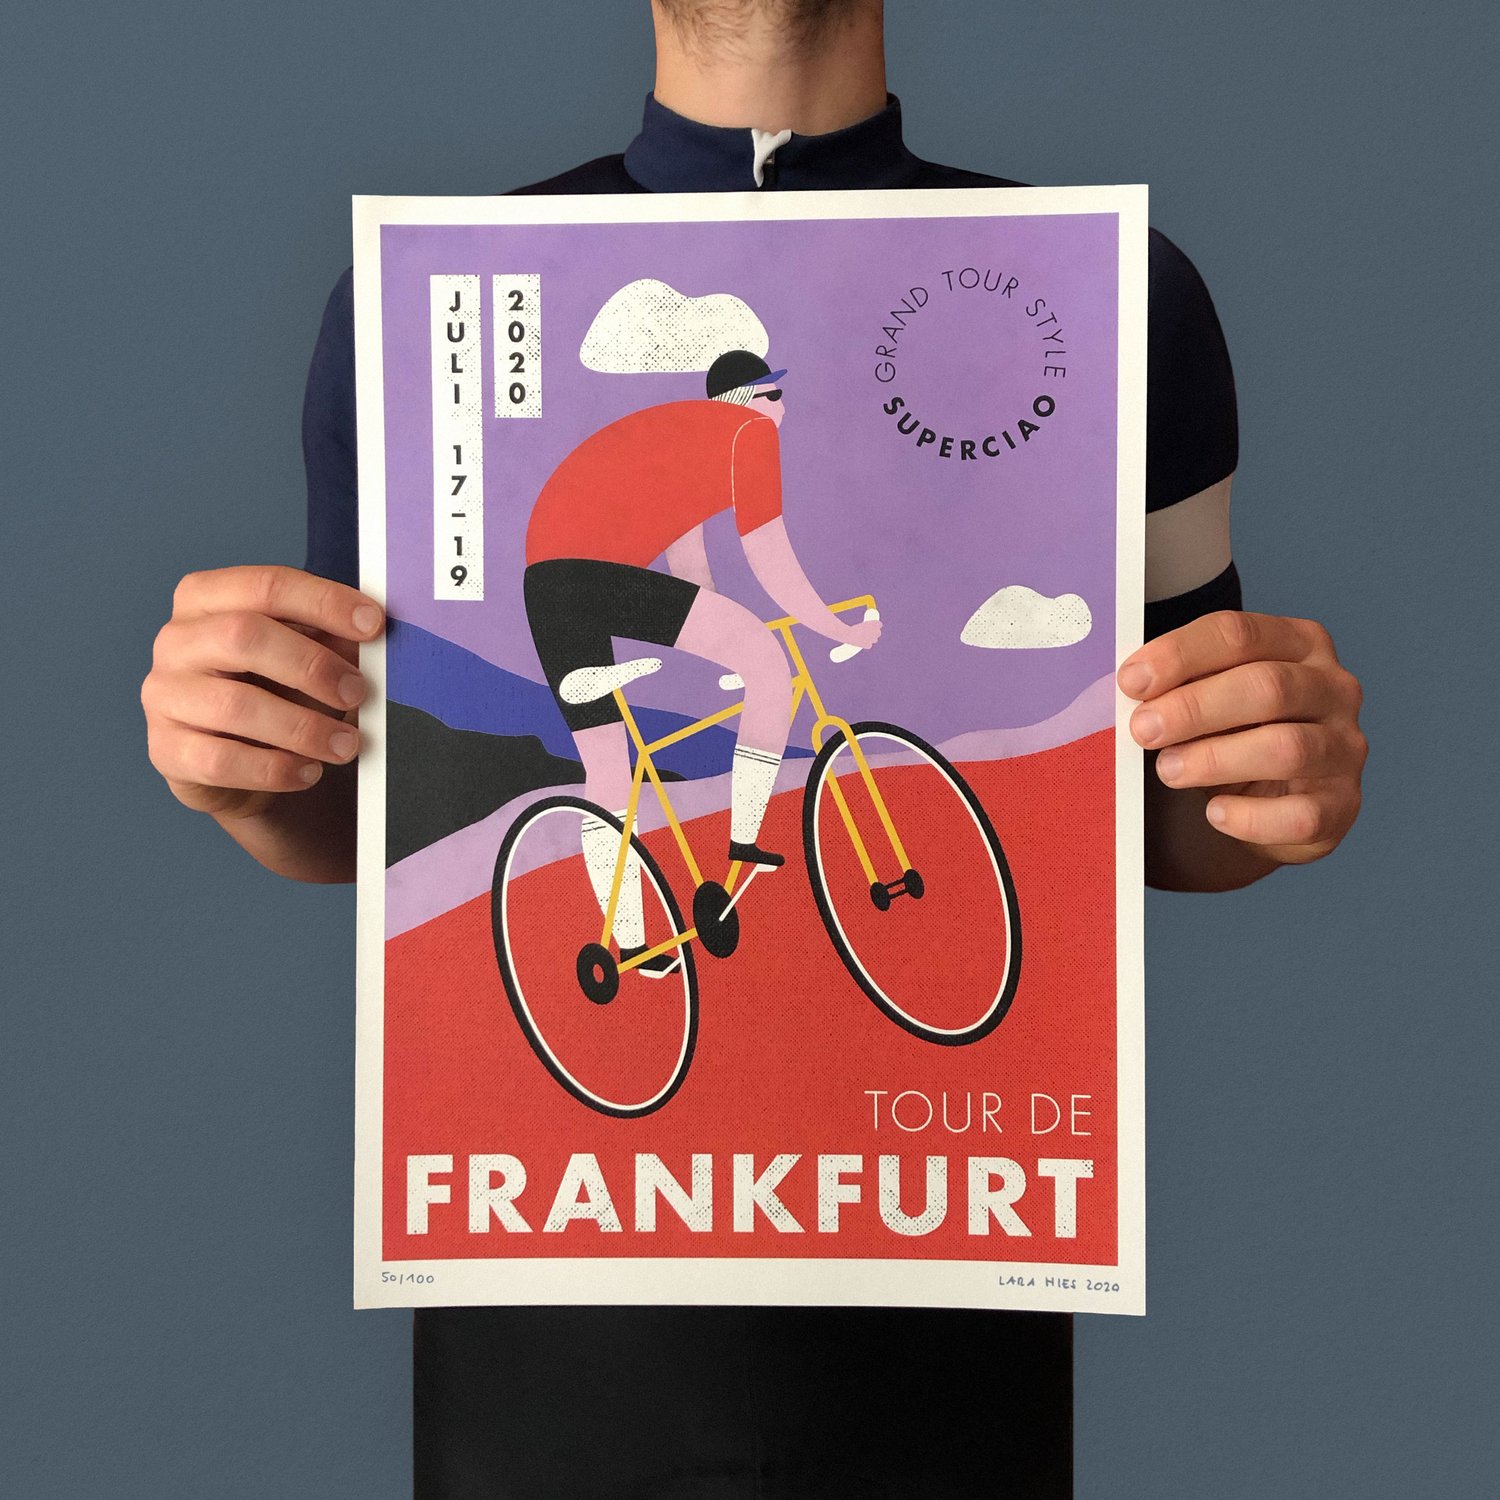 Tour de Frankfurt by SUPERCIAO